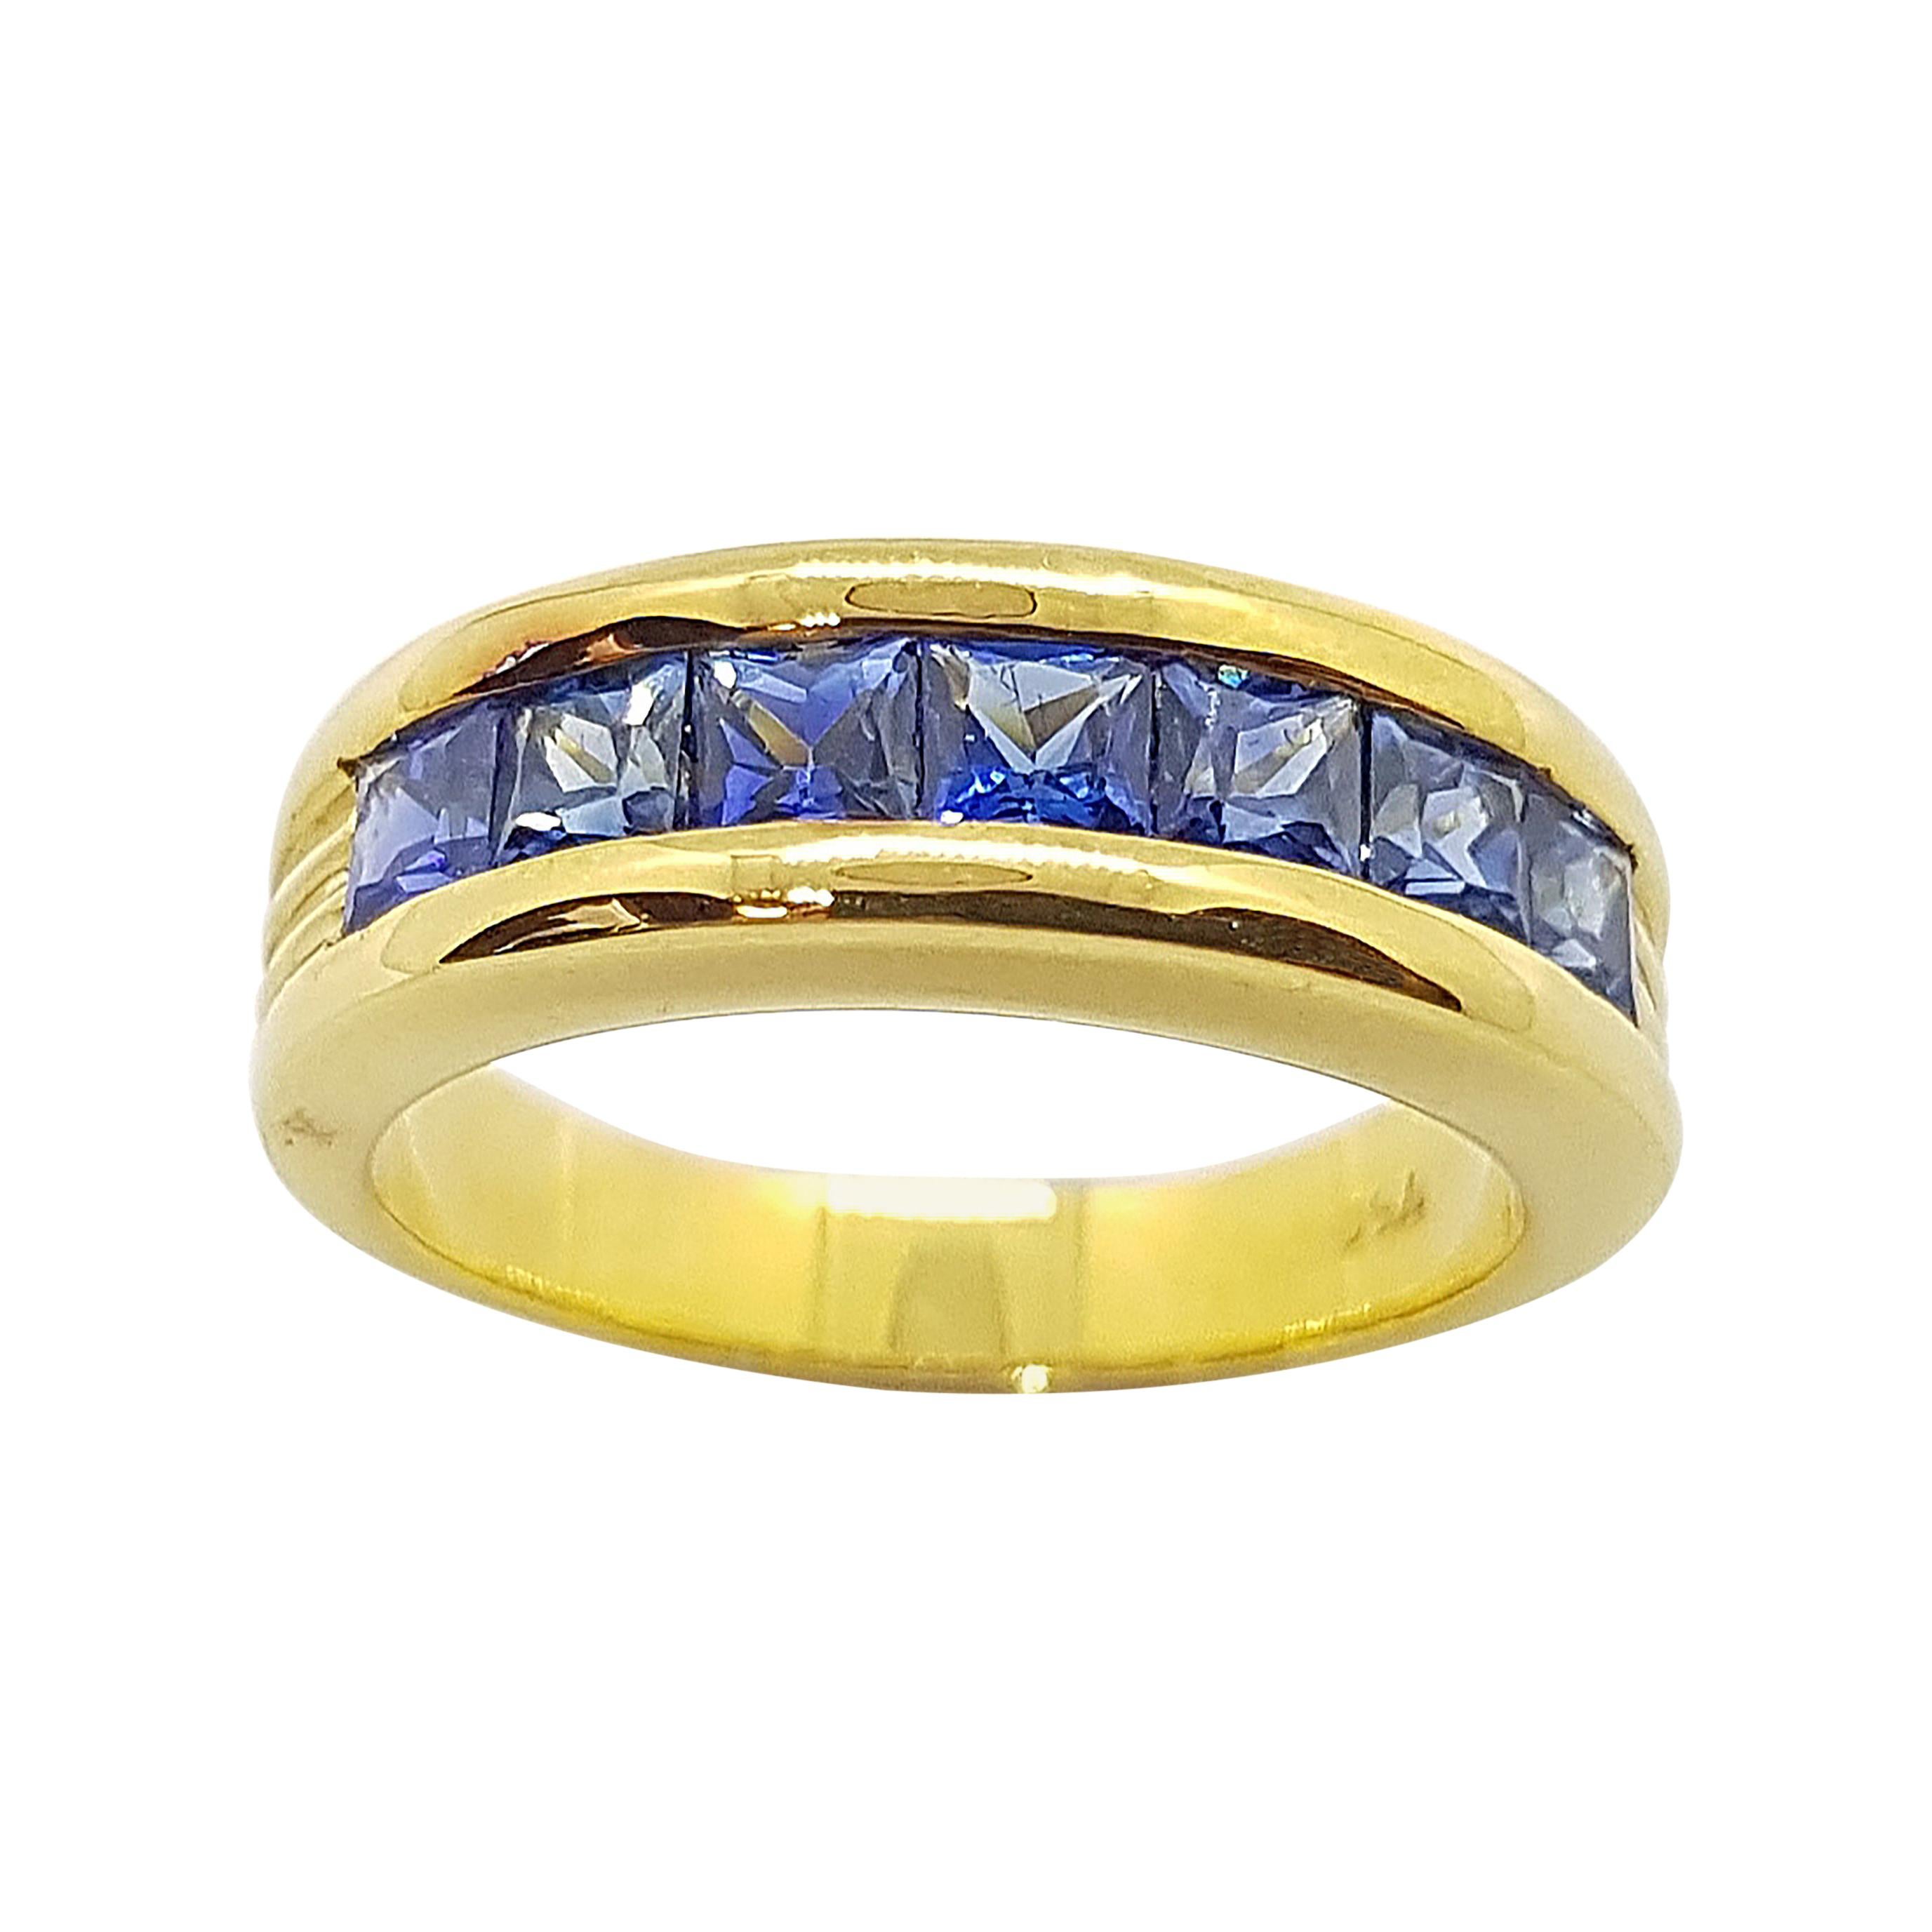 Blue Sapphire Ring Set in 18 Karat Gold Settings